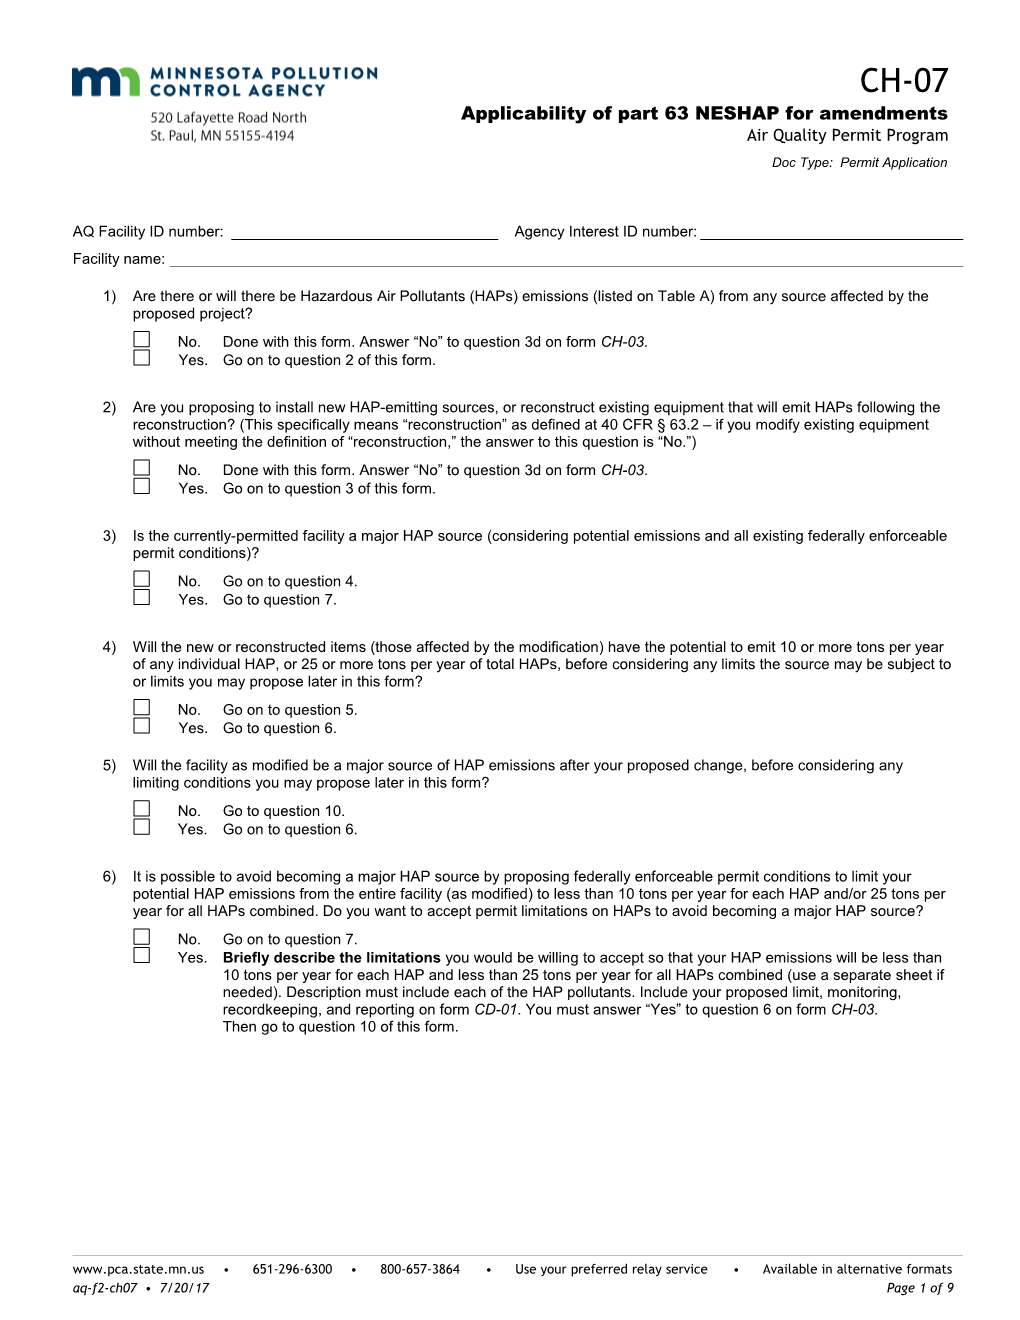 CH-07 Applicability of Part 63 NESHAP - Air Quality Permit Program - Form